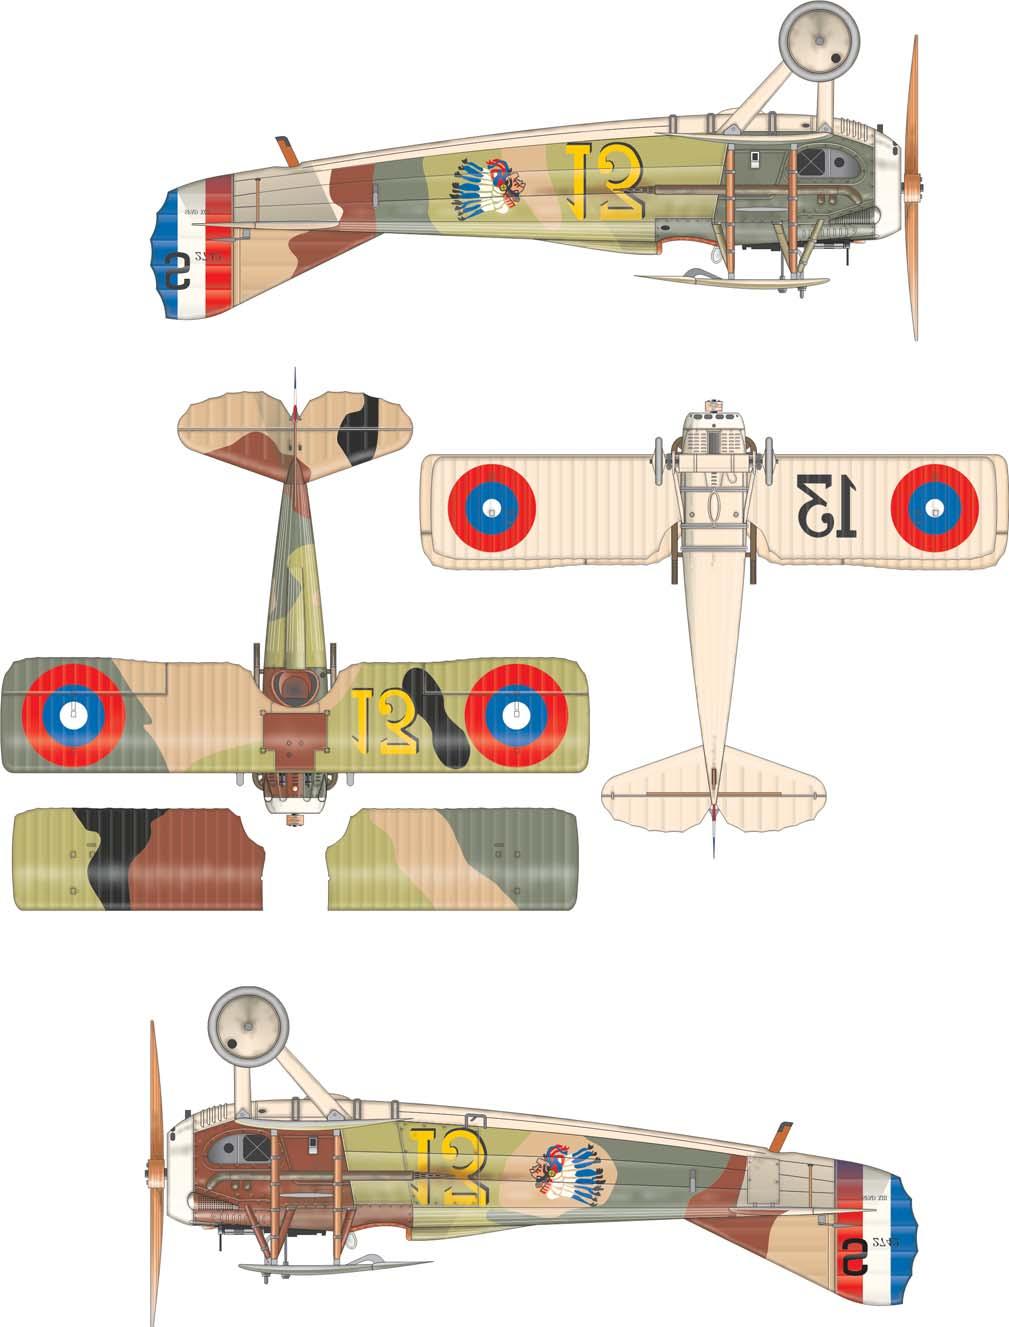 C Gorman de Freest Larner, 10rd Aero Squadron - podzim 1918 Se Spadem XIII S2742 na podzim 1918 létal u 10. Aero Squadron Lieutenant (od 8.